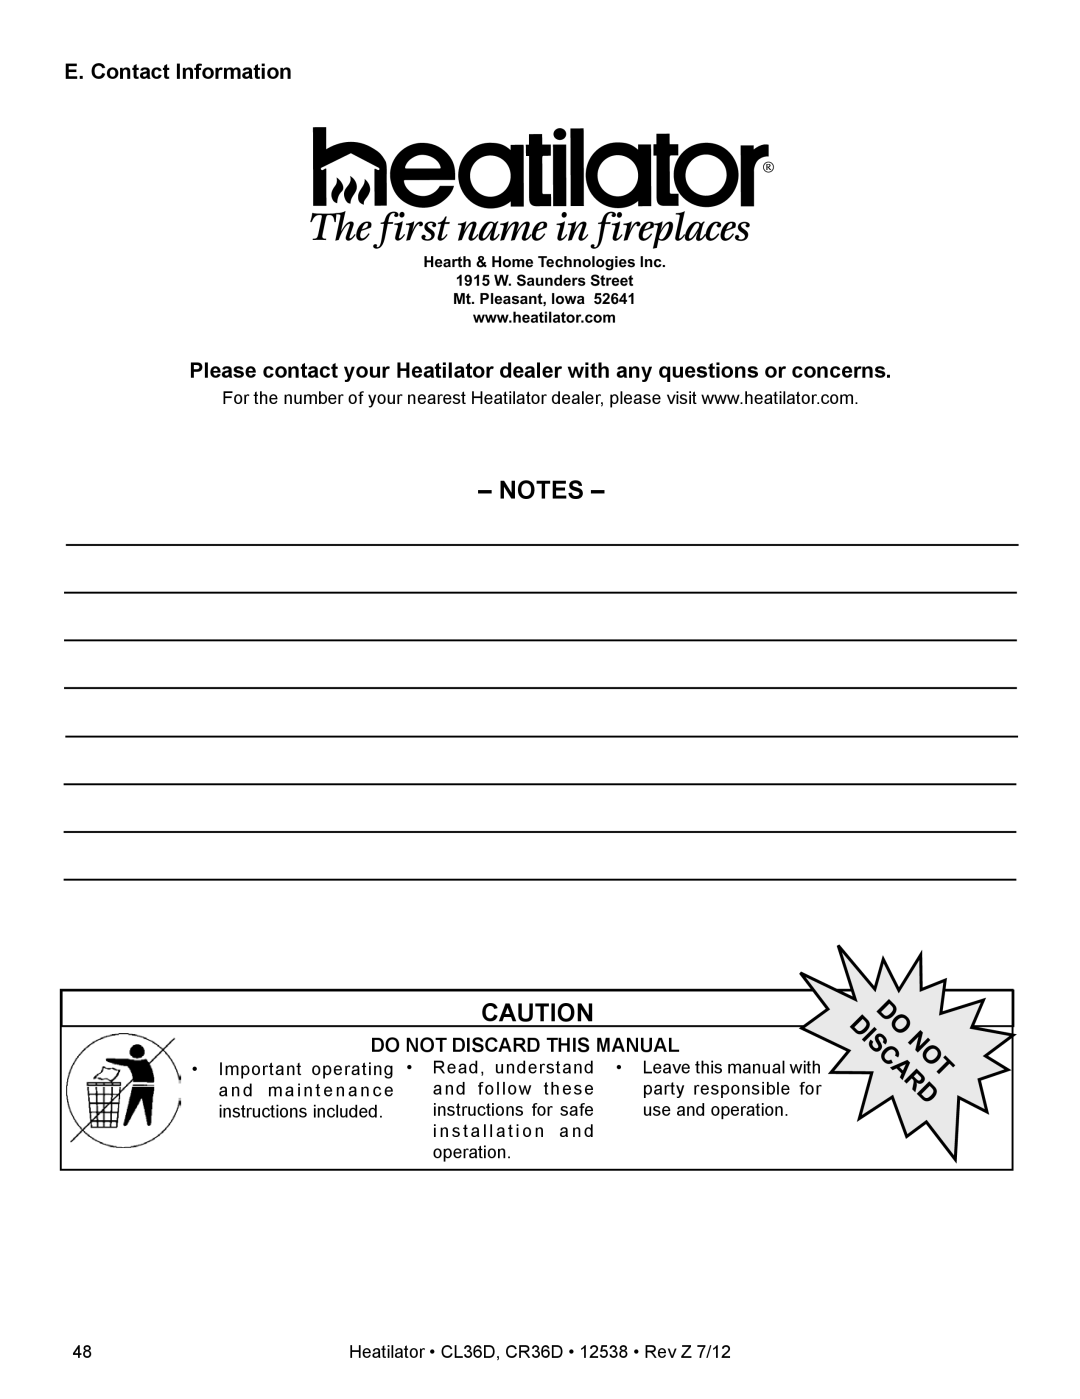 Heatiator CL36D owner manual Notes, E. Contact Information, Do Not Discard This Manual, Do Discardnot 